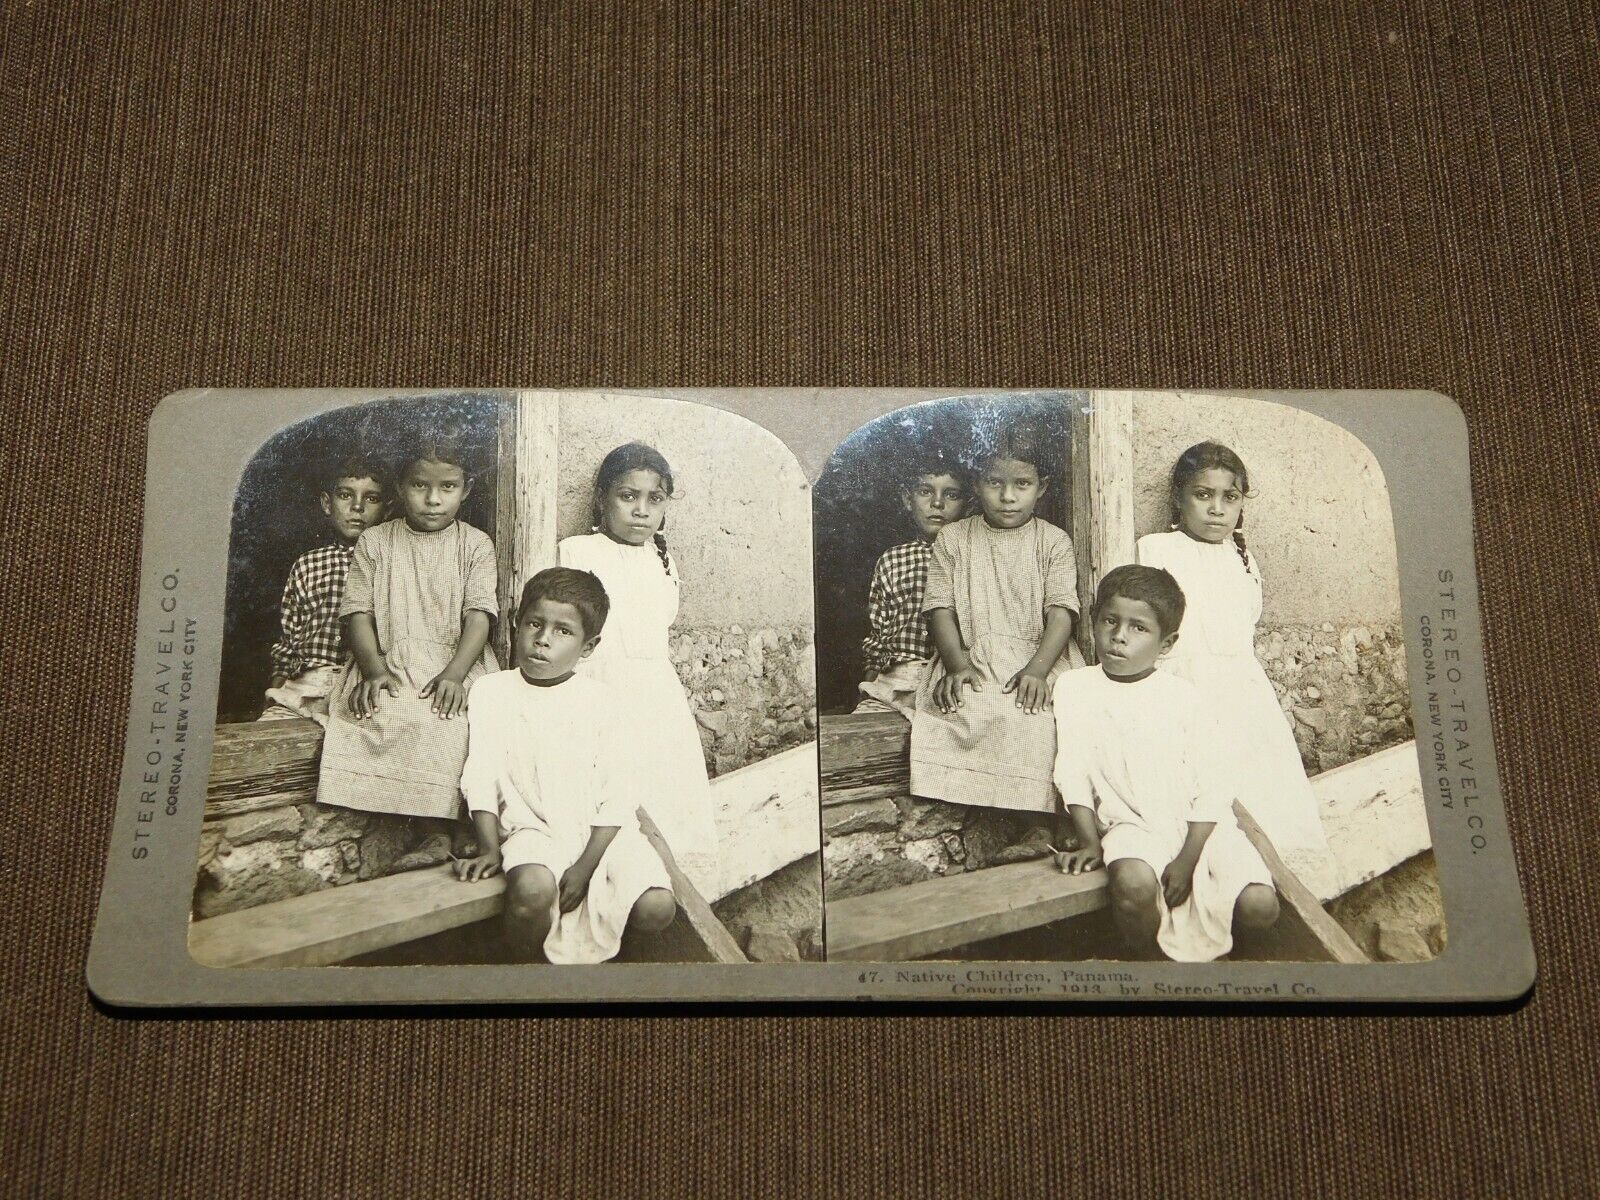 VINTAGE STEREOVIEW STEREOSCOPE CARD 1913 NATIVE CHILDREN PANAMA